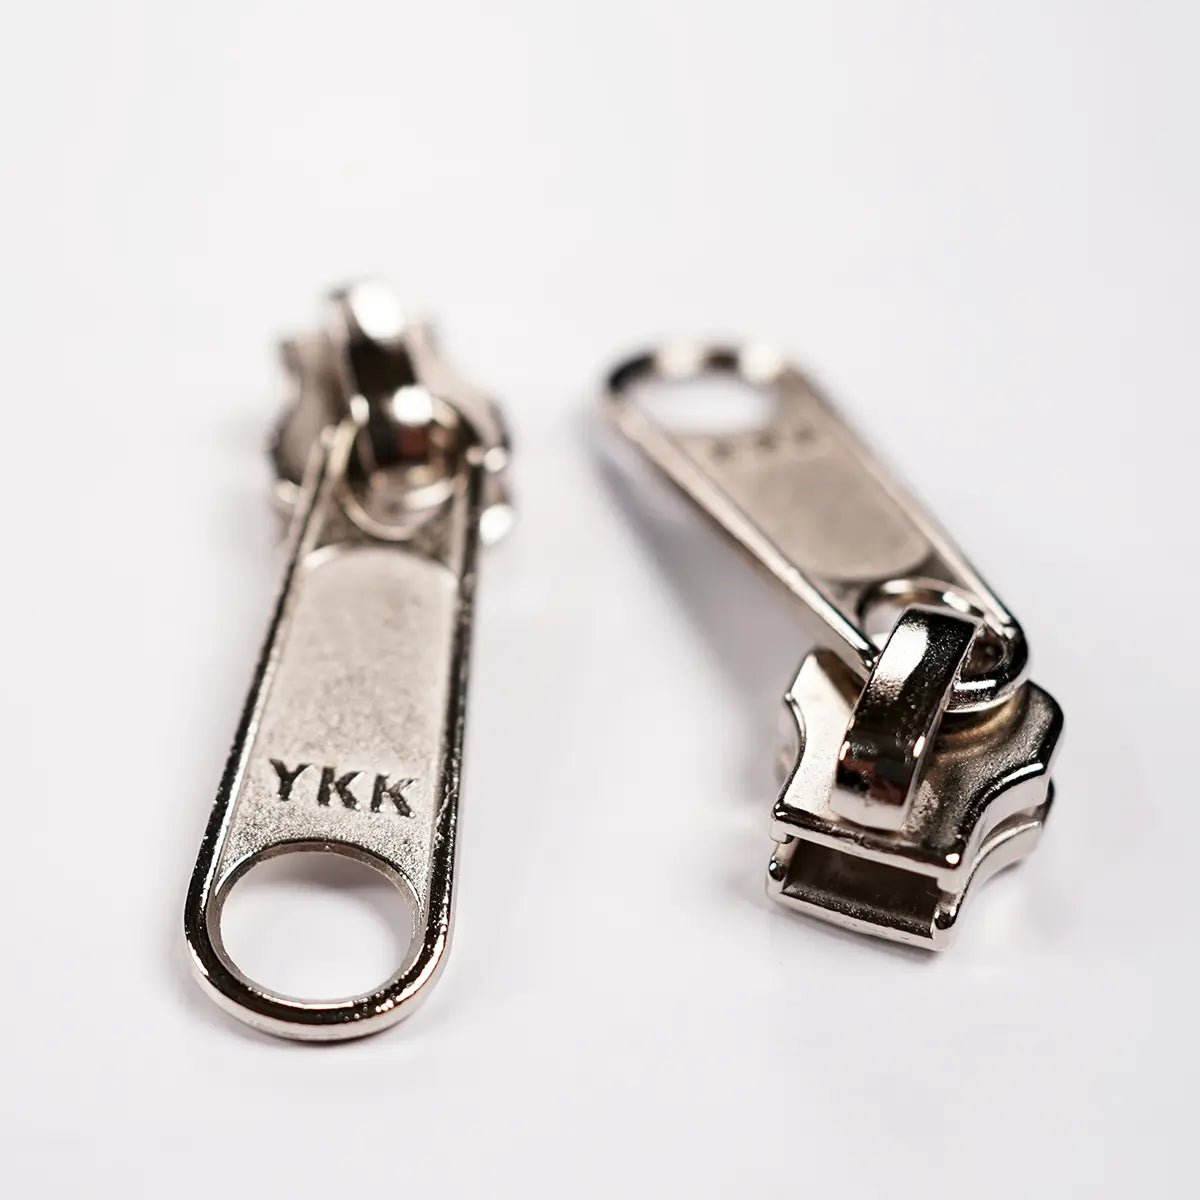 YKK No 5 Nickel Zipper Purse Slider Pull 2 Pack